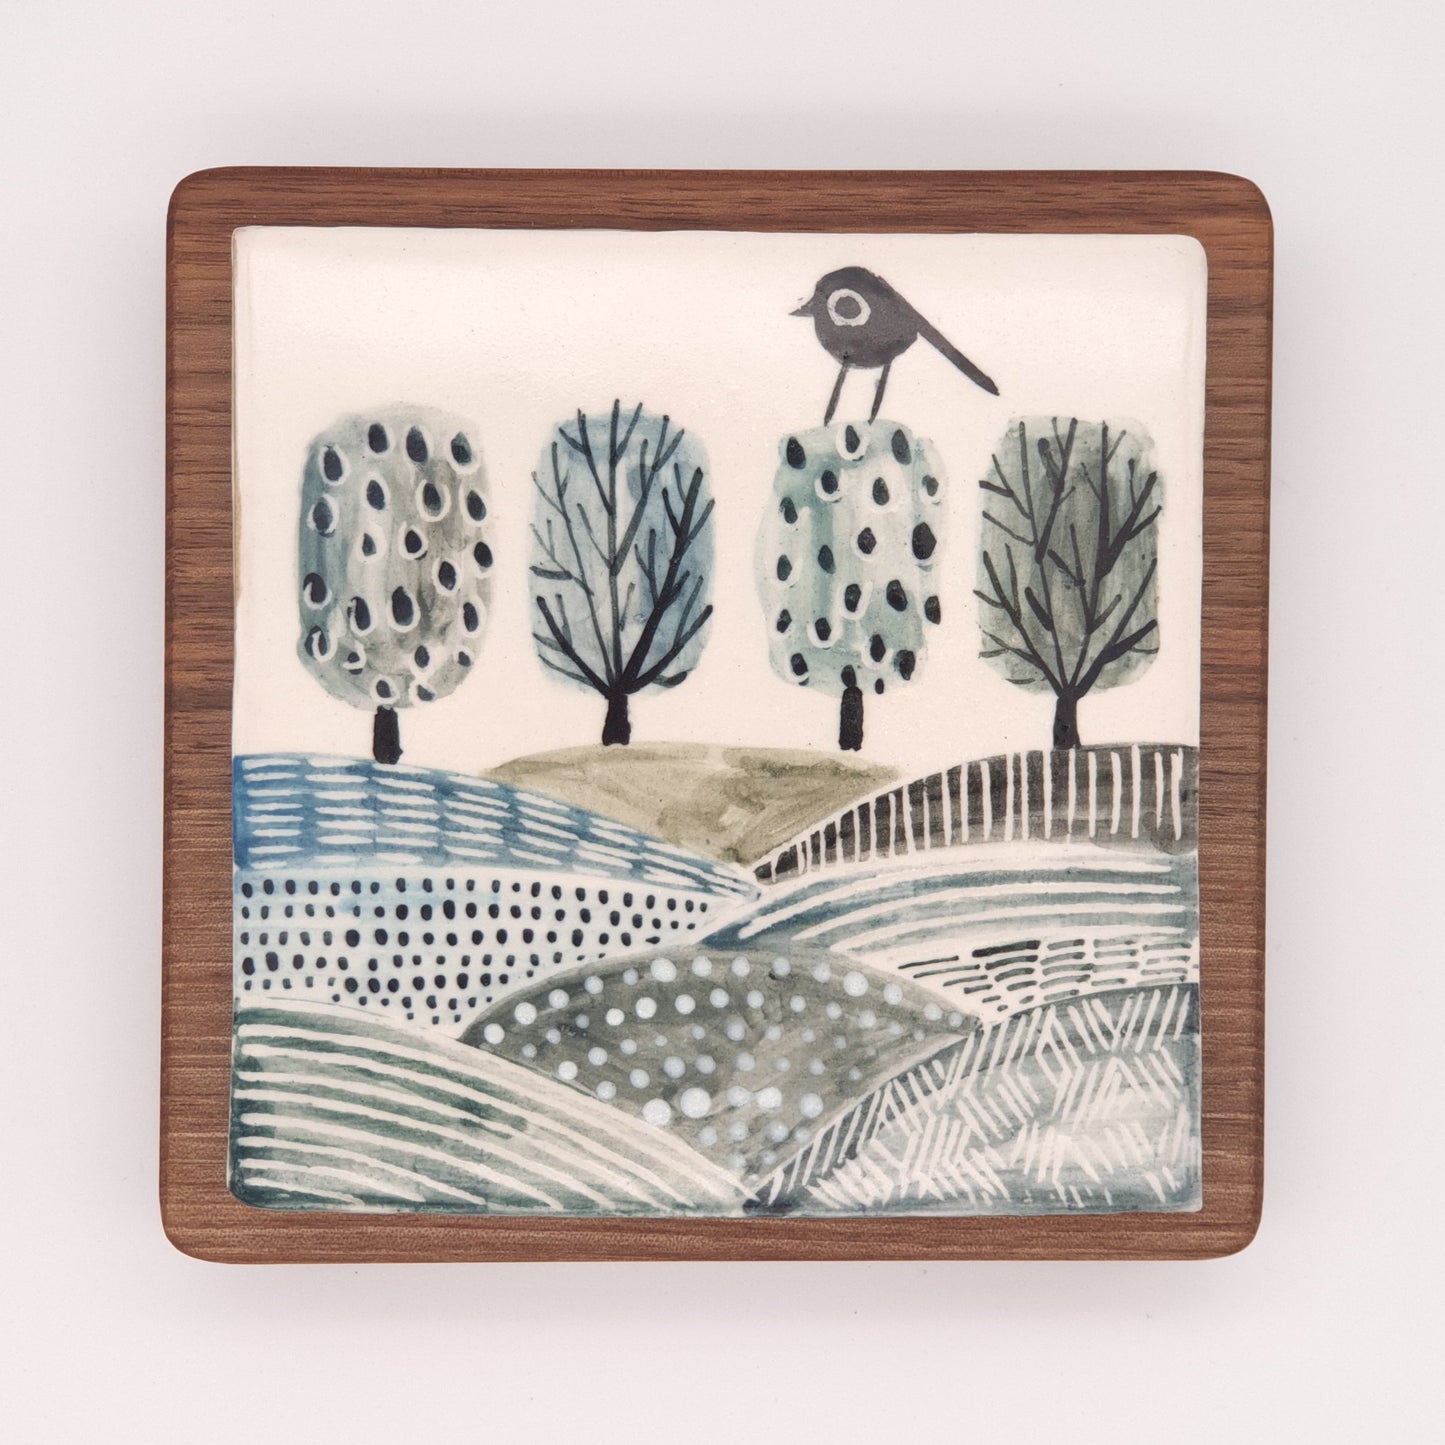 Ceramic Tile - Hilltop Trees and Bird